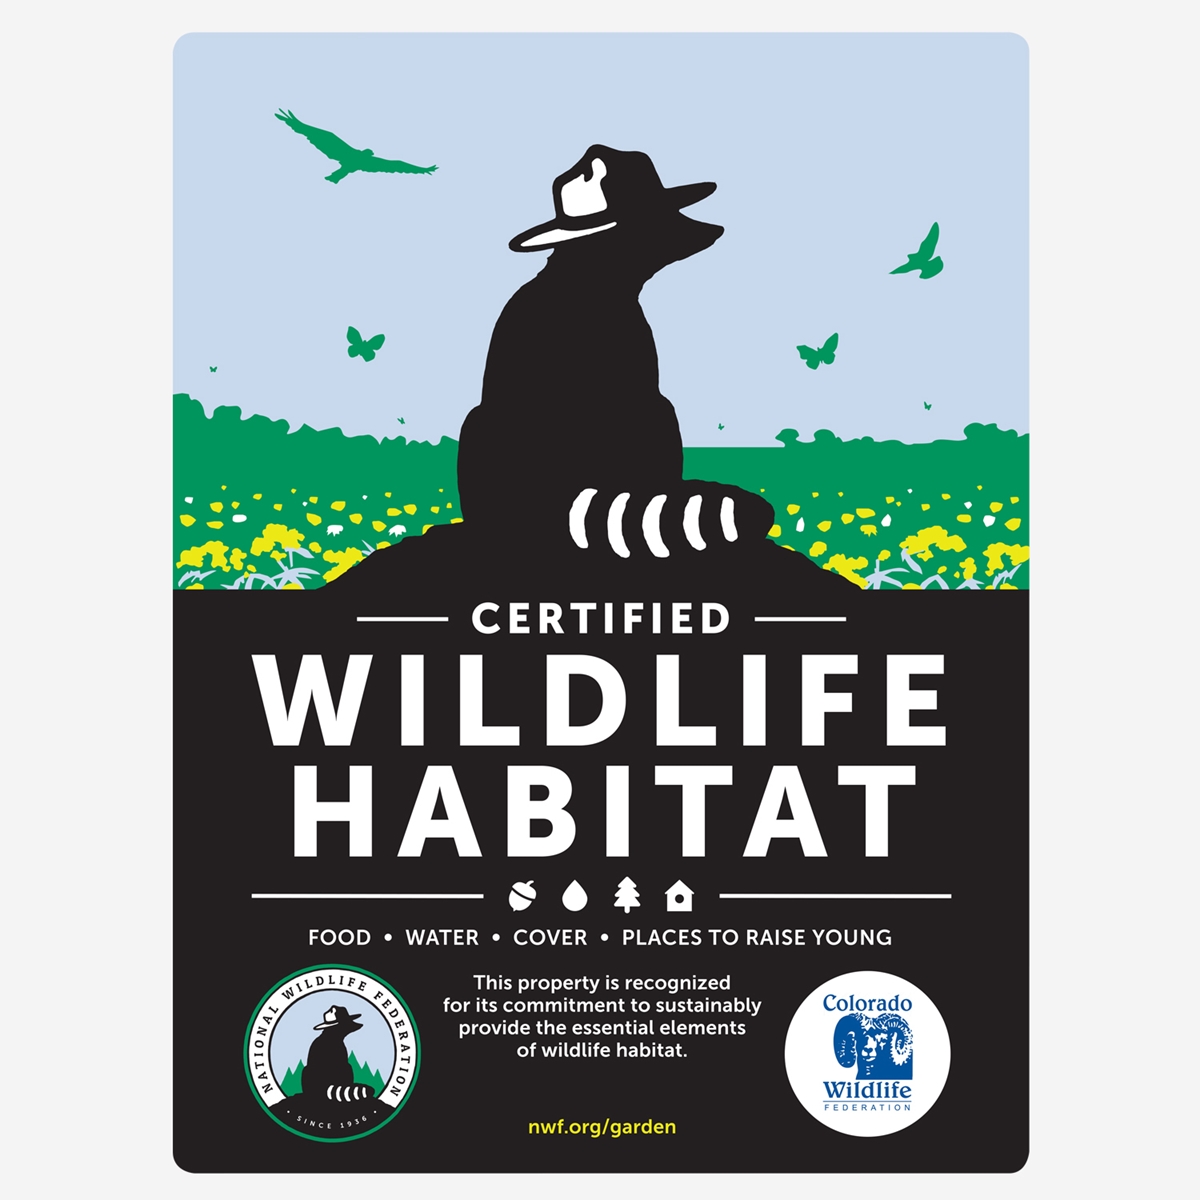 Colorado Wildlife Federation Certified Wildlife Habitat Sign